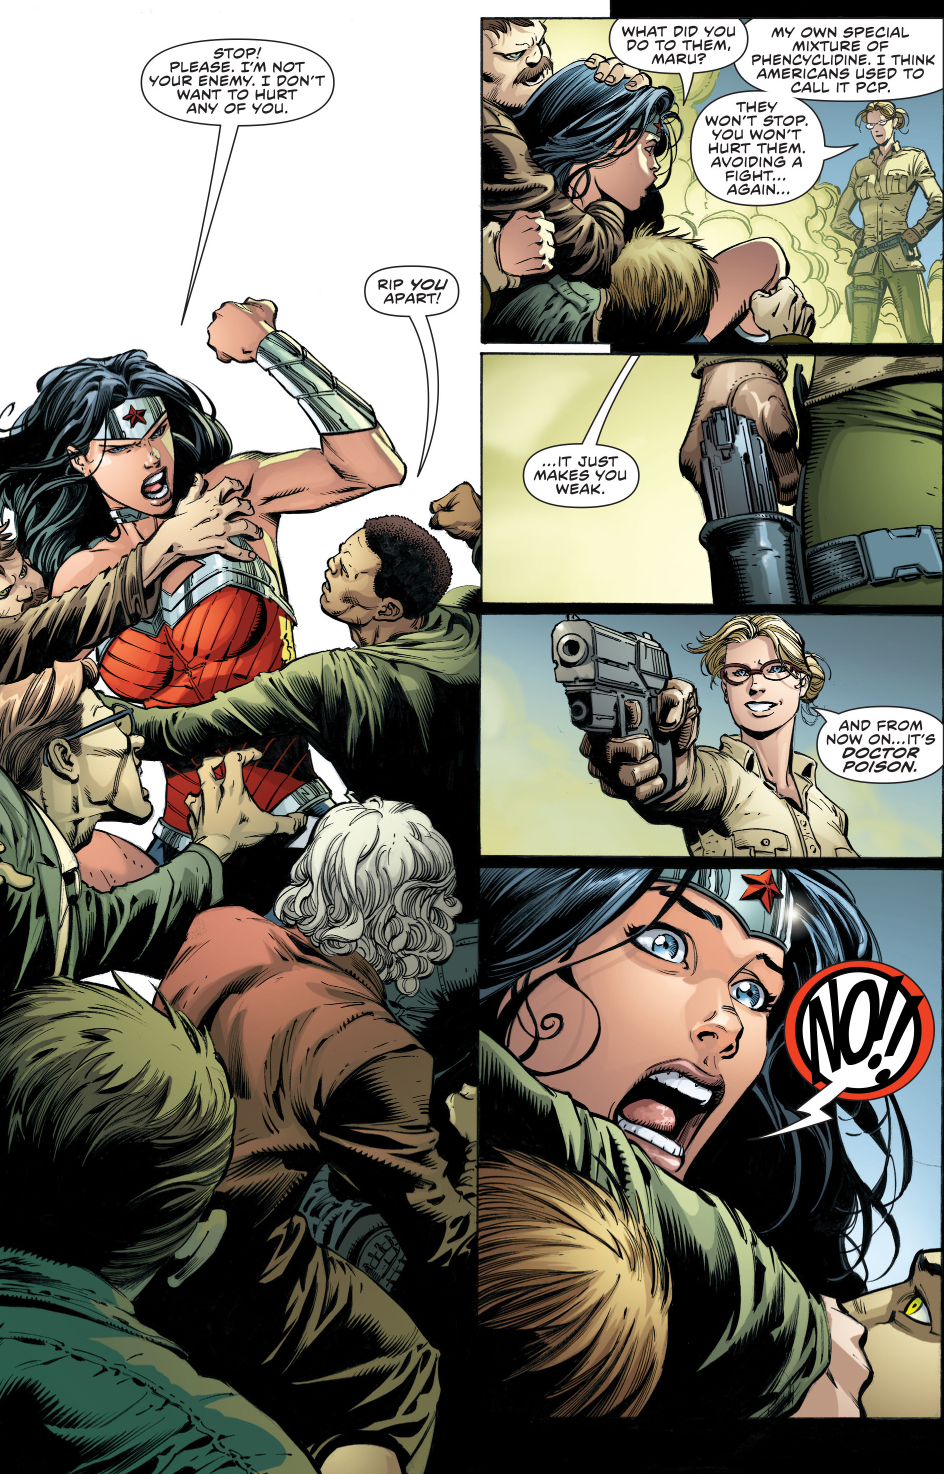 Wonder Woman VS Doctor Poison (New 52)